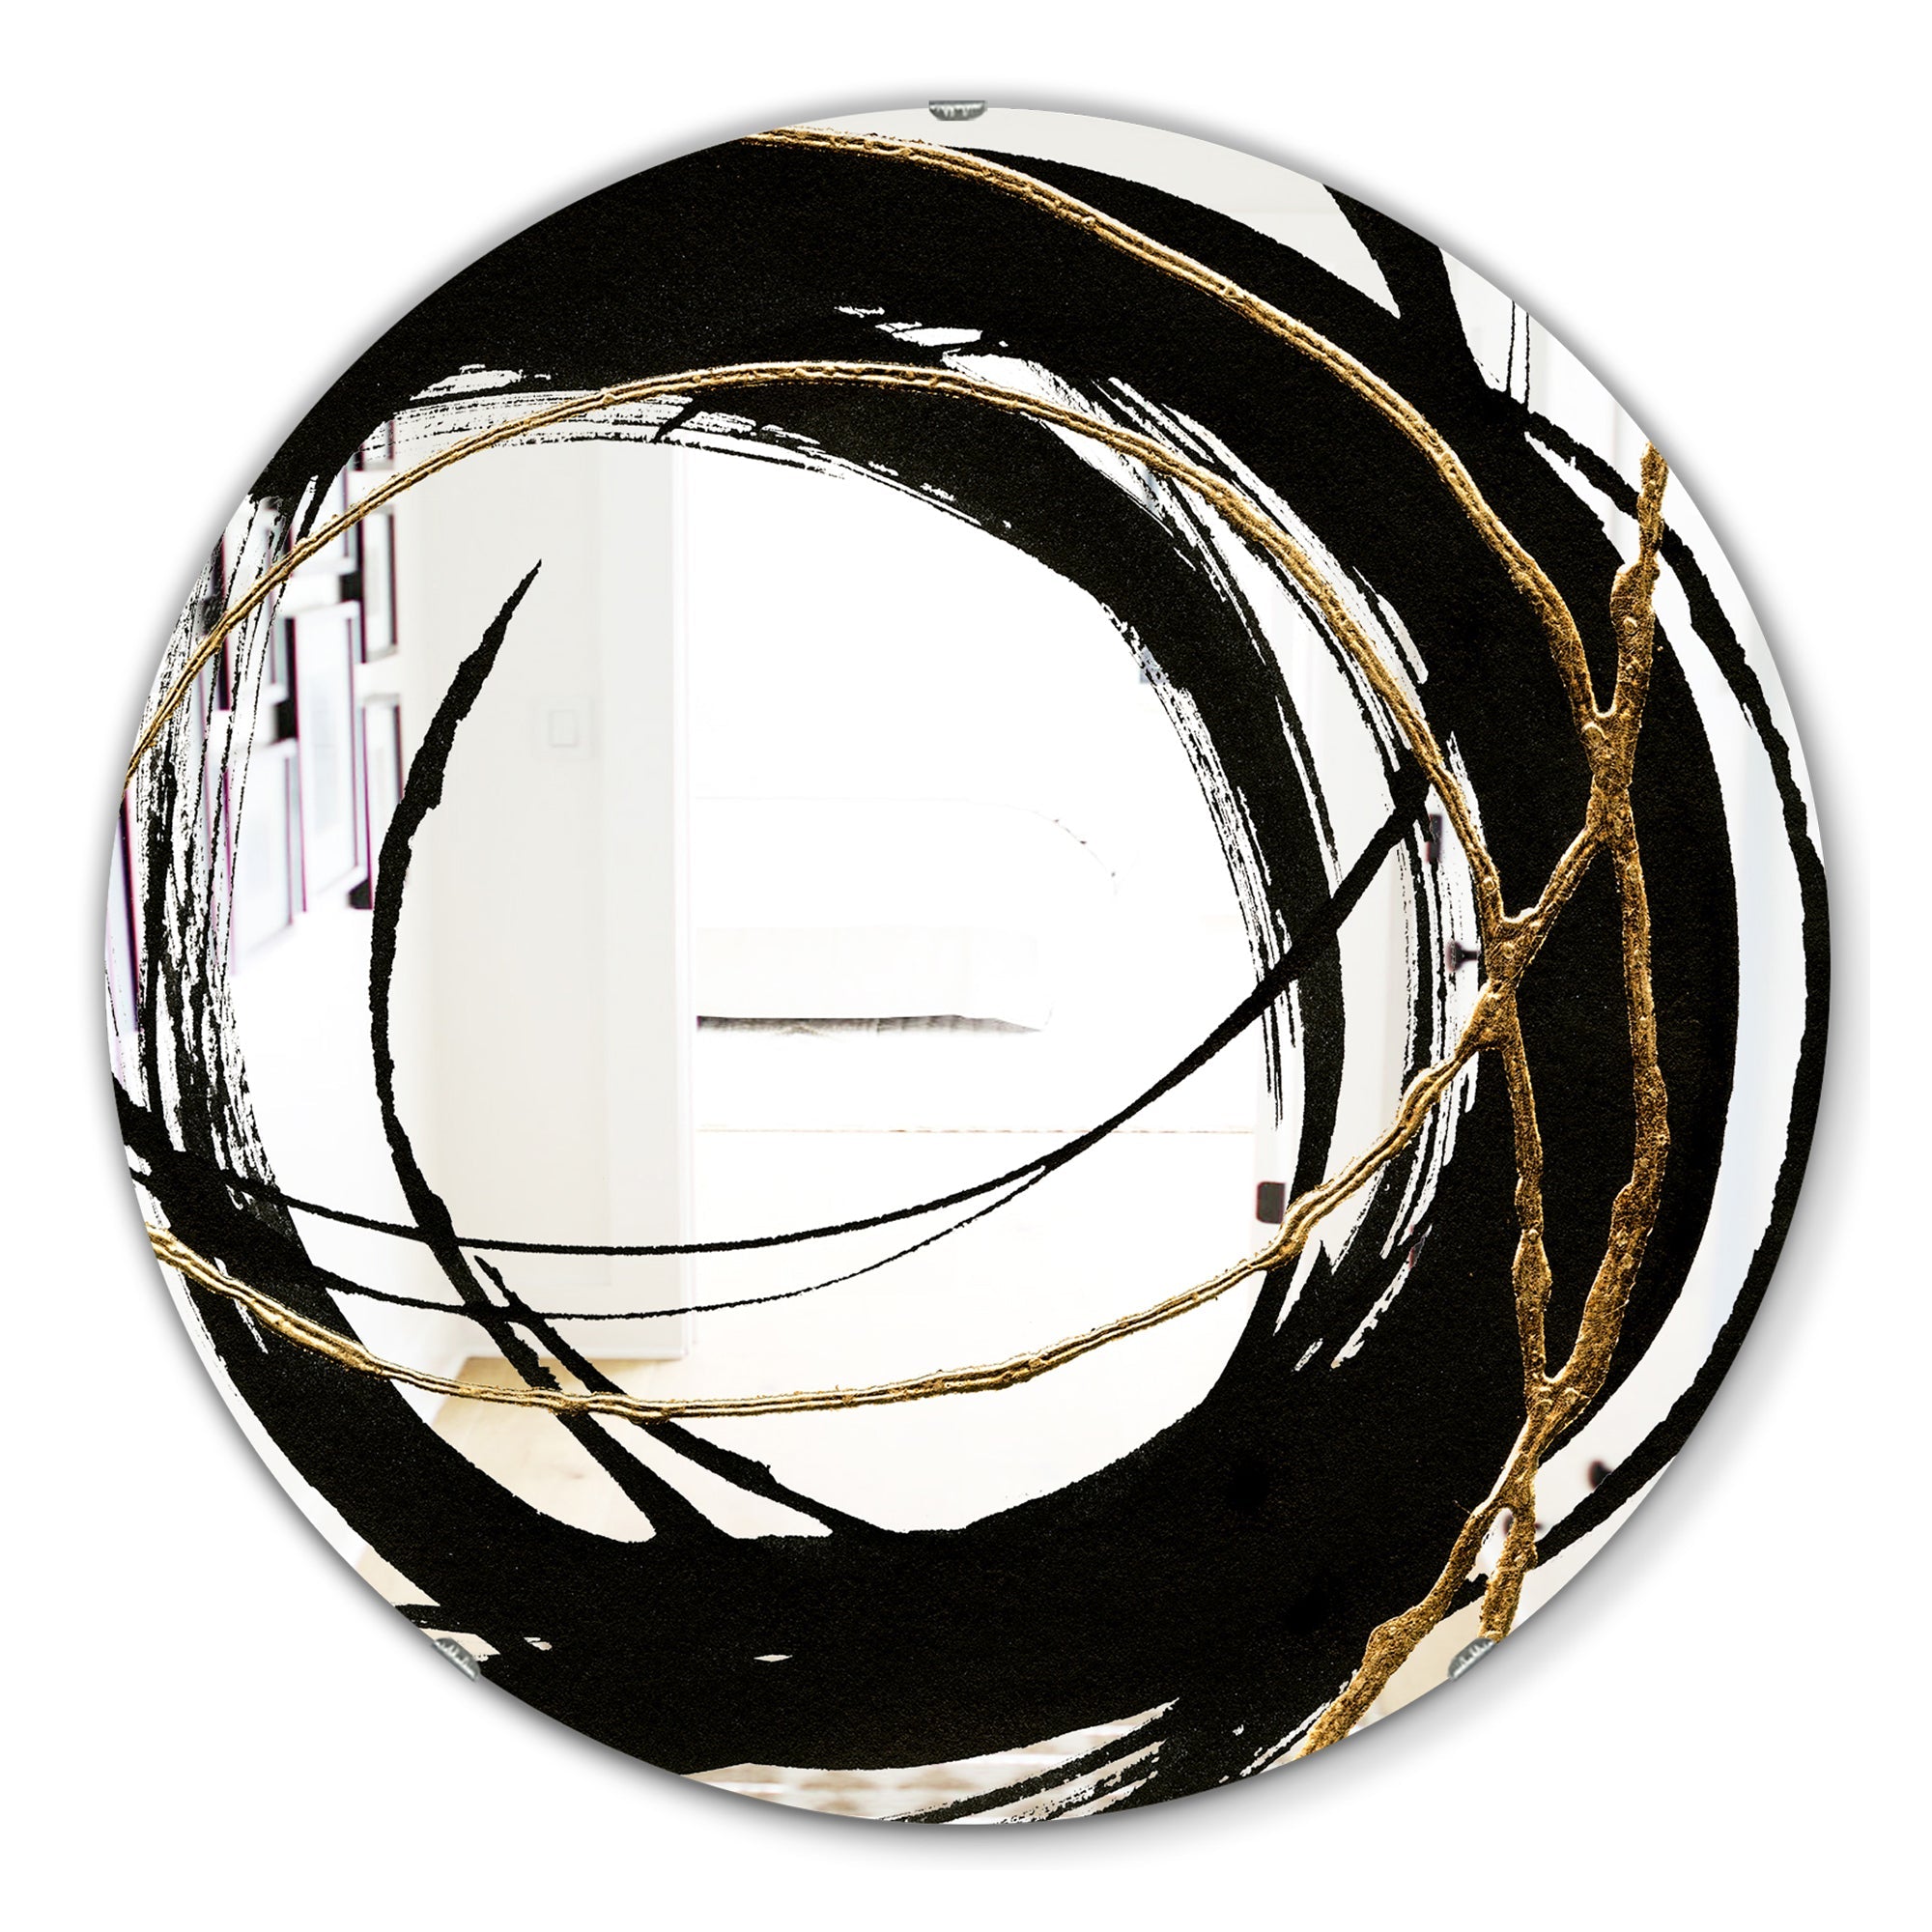 Black & White 10' Glam Mirror - Oval or Round Wall Mirror